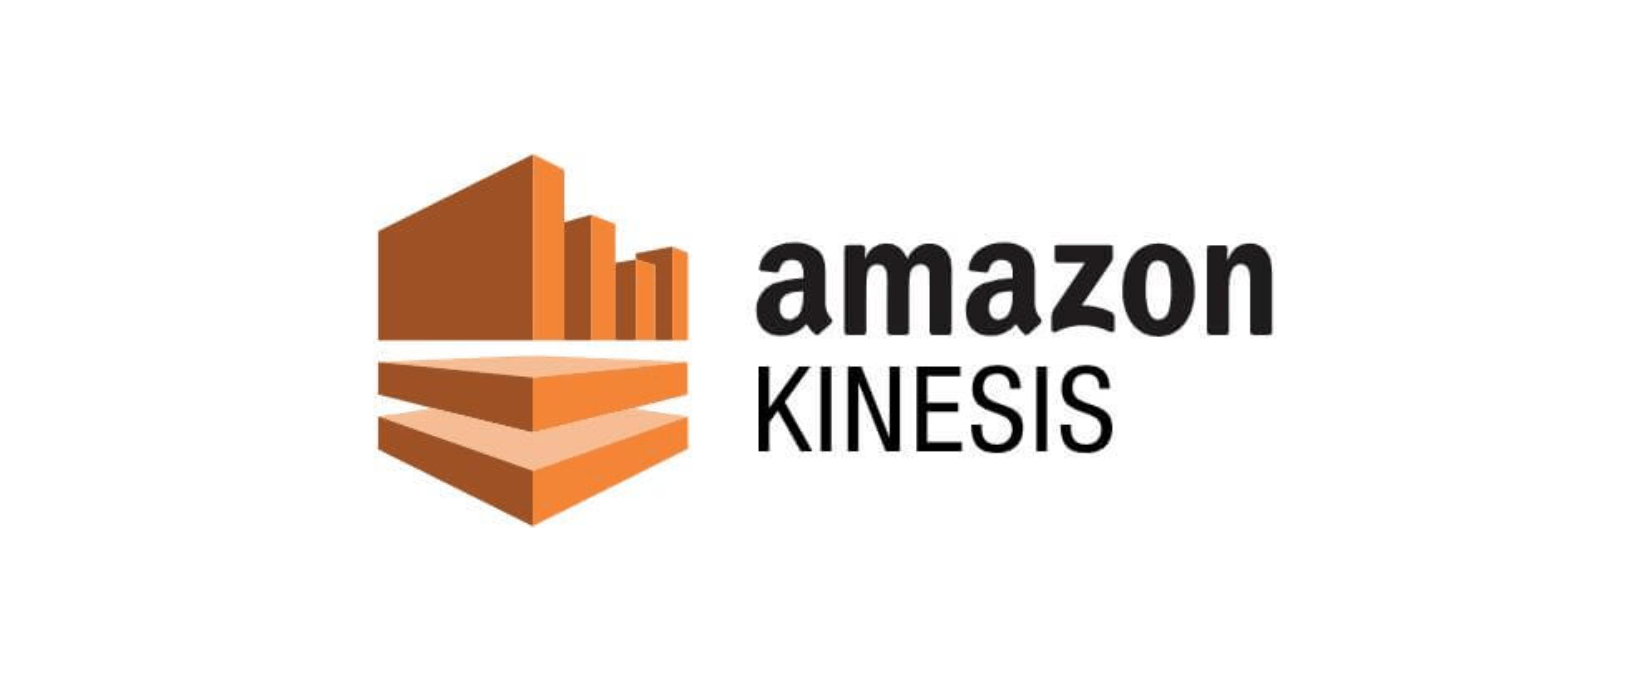 Amazon Kinesis Logo: Kinesis S3